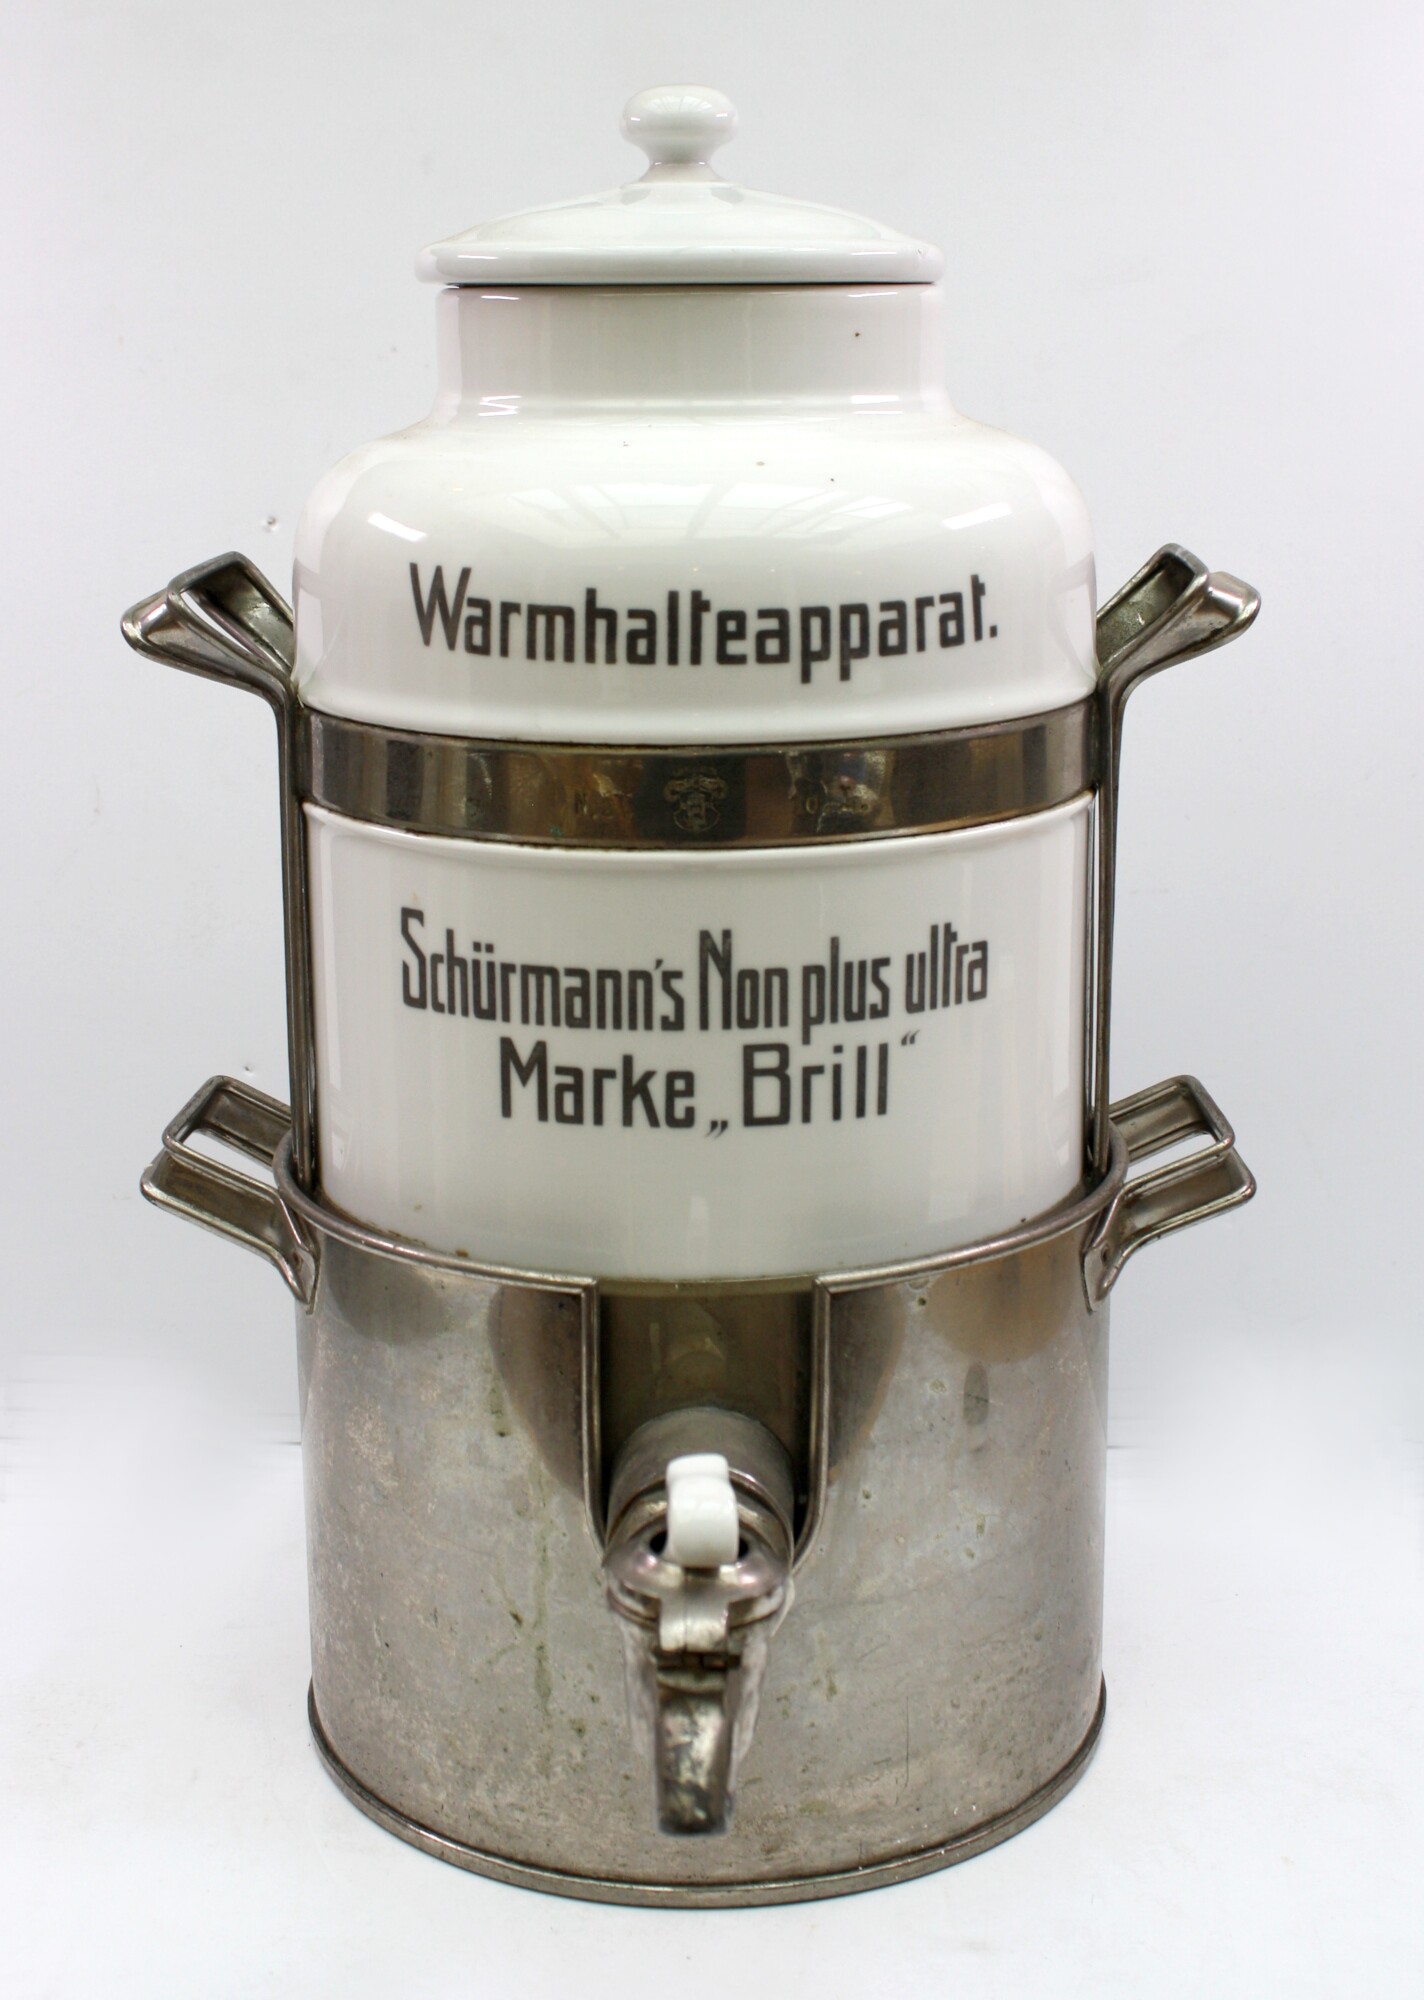 Warmhalteapparat Marke "Brill" (Drilandmuseum CC BY-NC-SA)